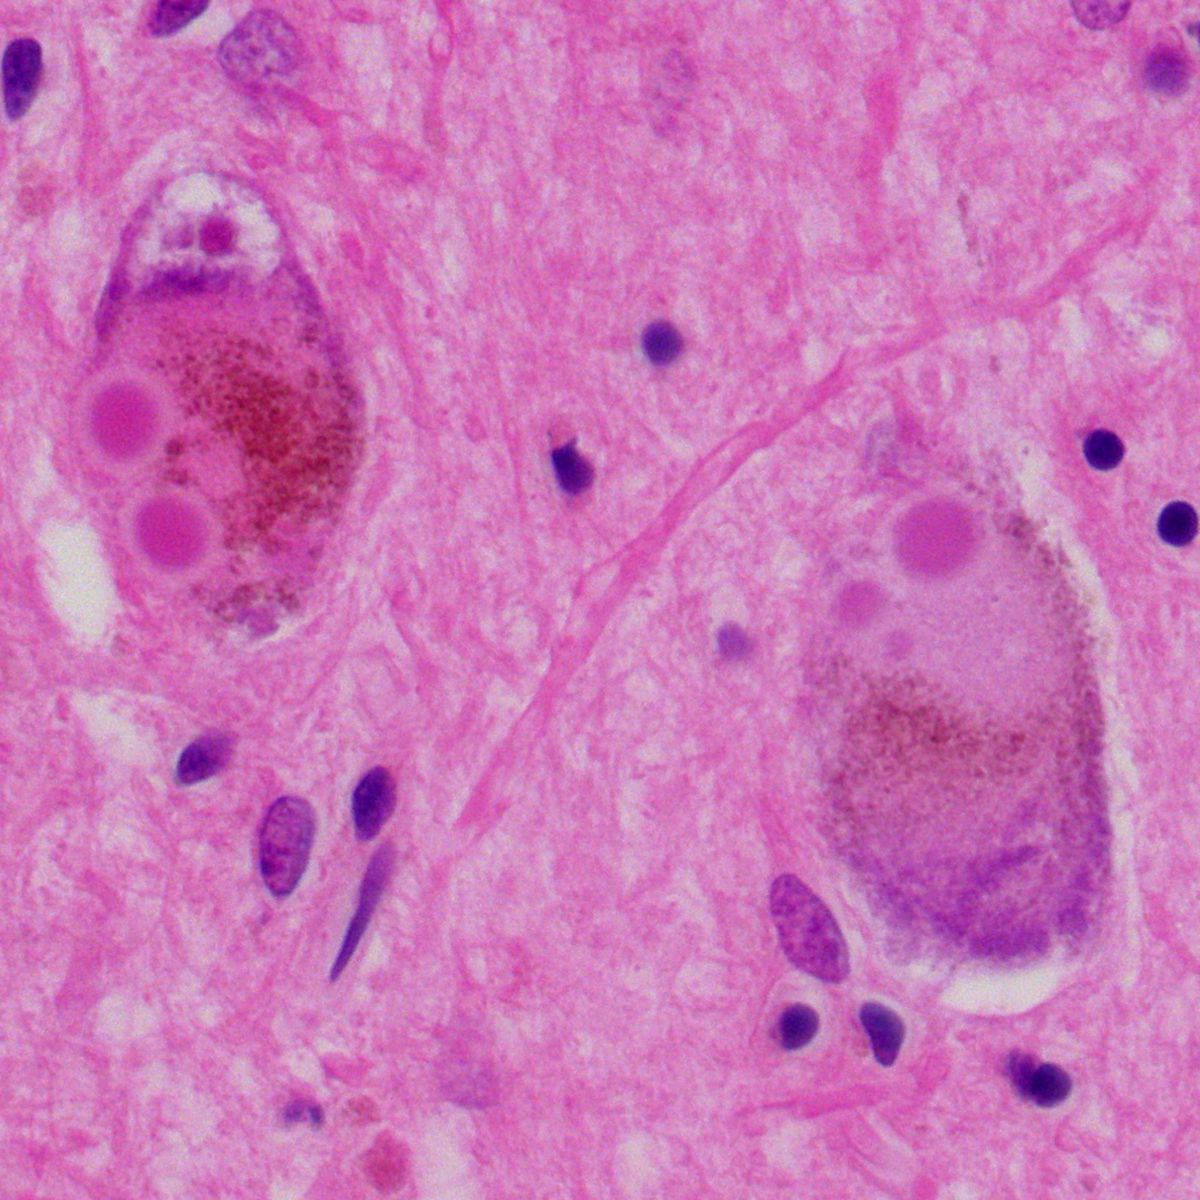 Lewy-Körper (Substantia nigra)